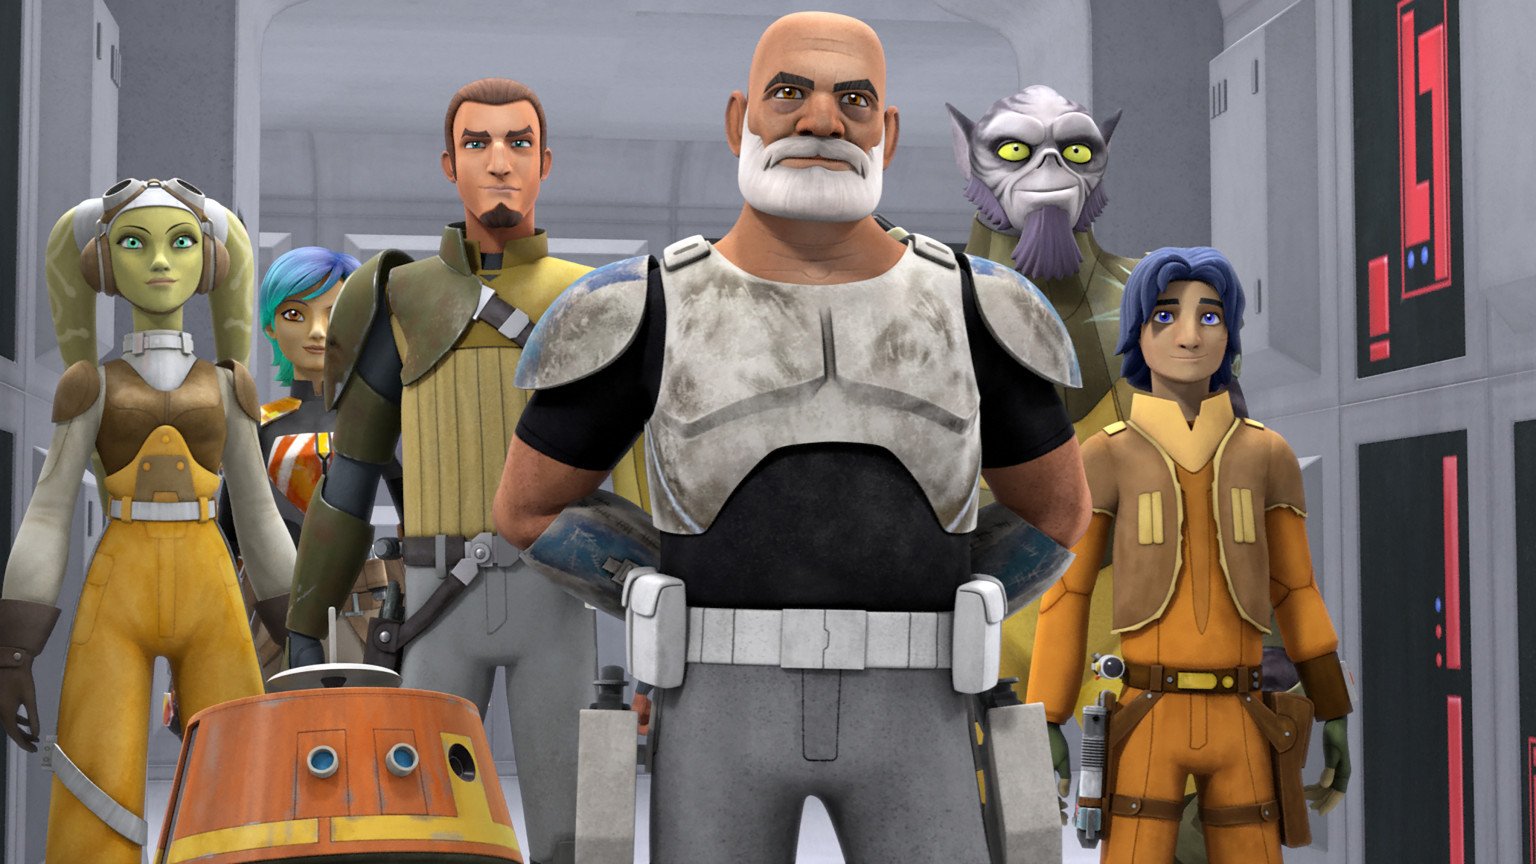 UPDATE 2! New Star Wars Rebels Video: Return of the Clones & New TV Spot! - Star Wars News Net